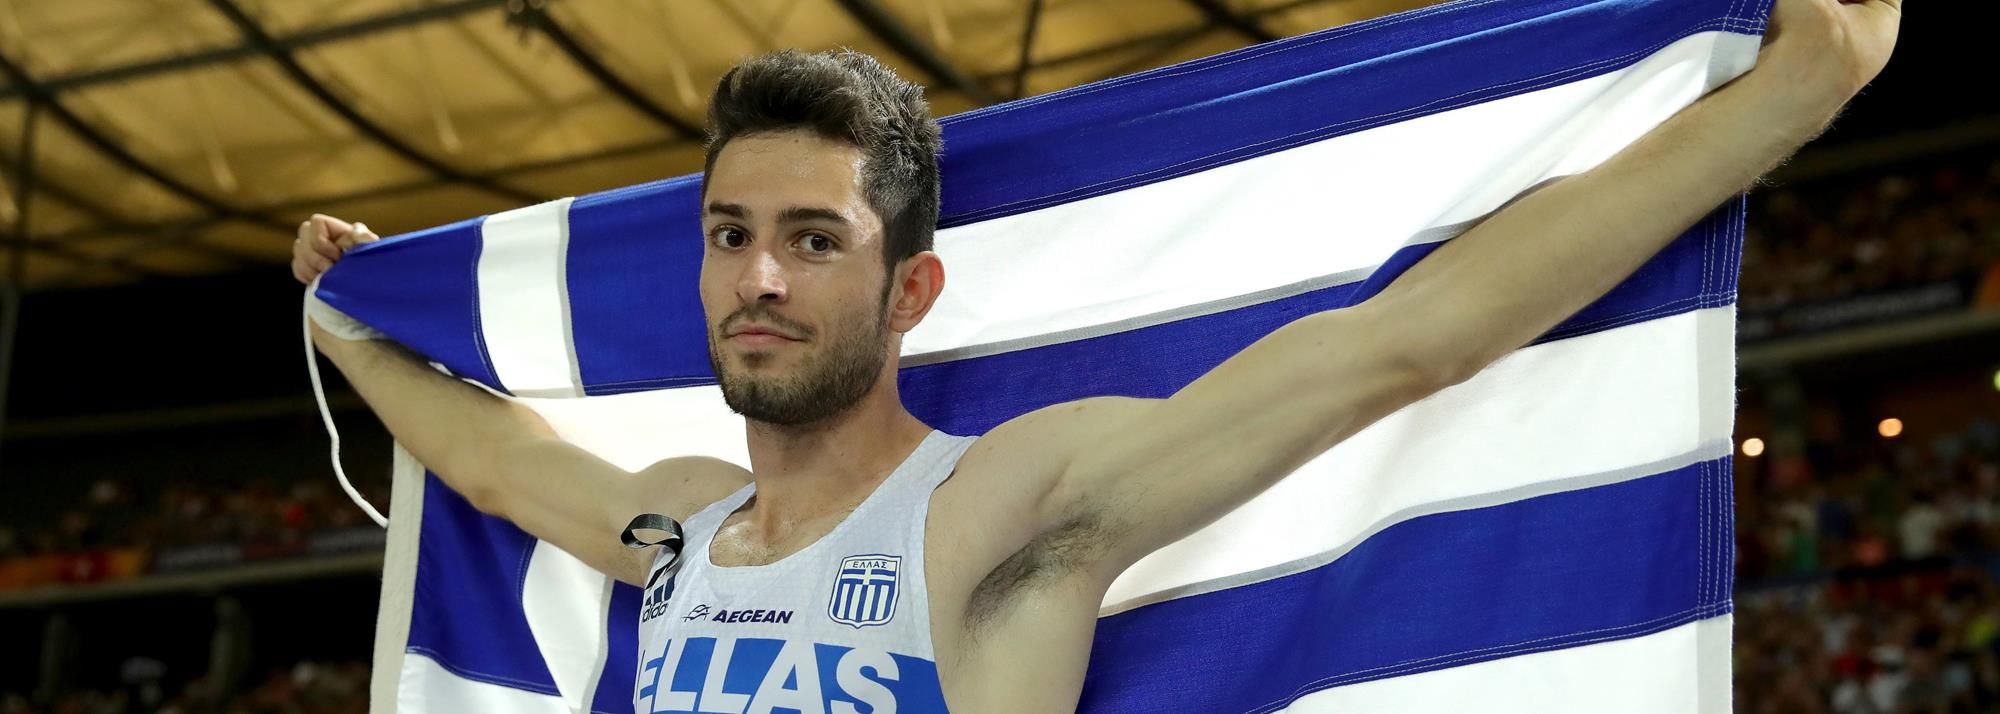 Miltiadis TENTOGLOU | Profile | World Athletics